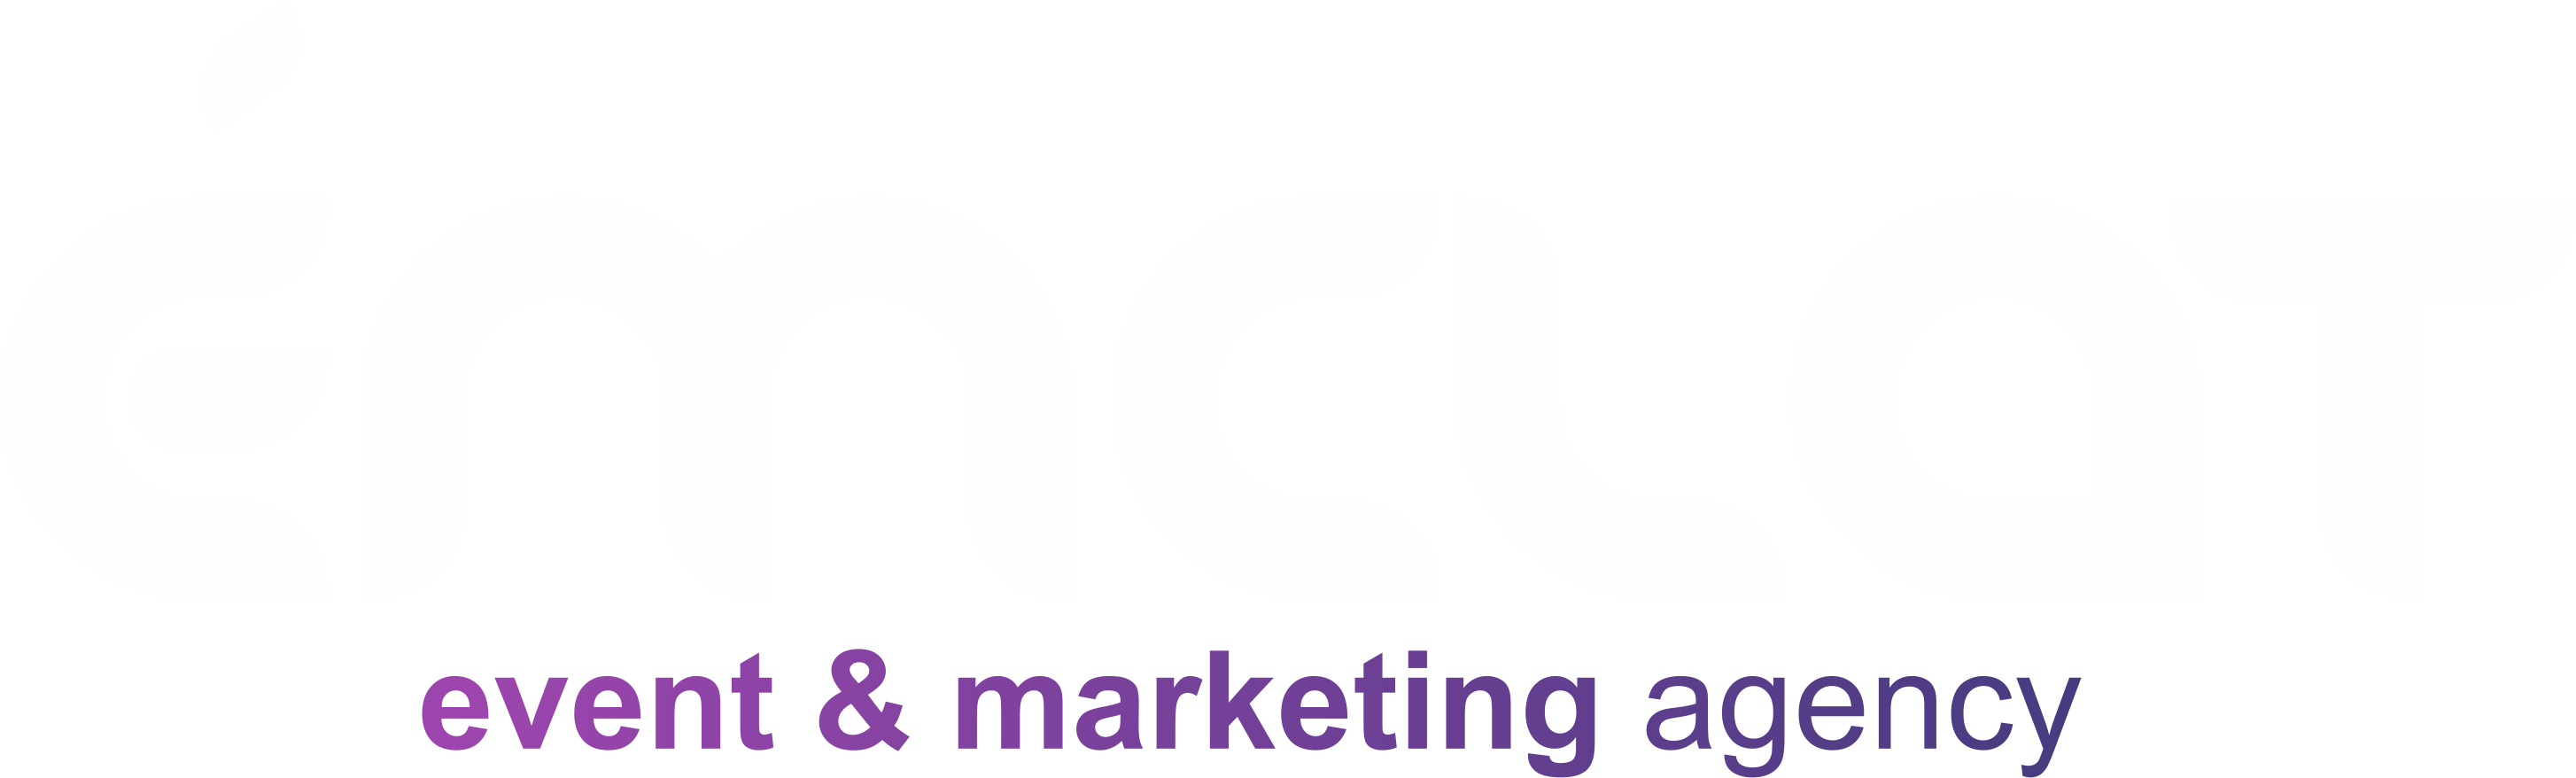 EMCLAT: event&marketing agency